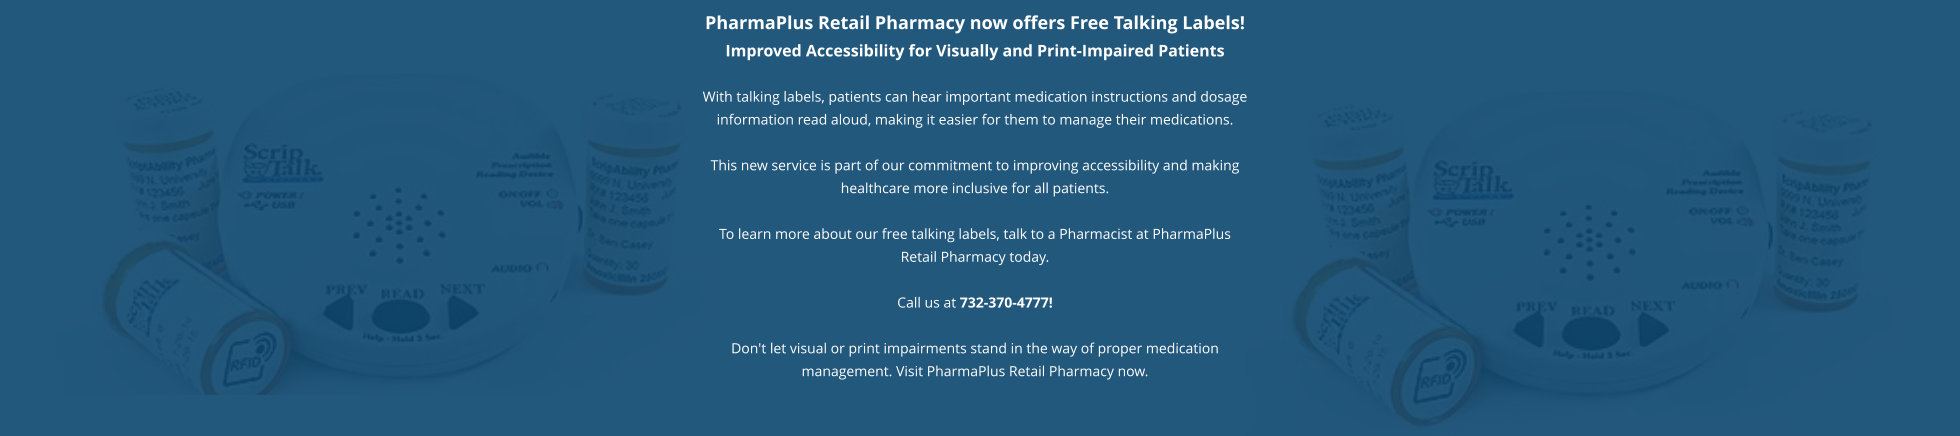 PharmaPlus Retail Pharmacy now offers Free Talking Labels!